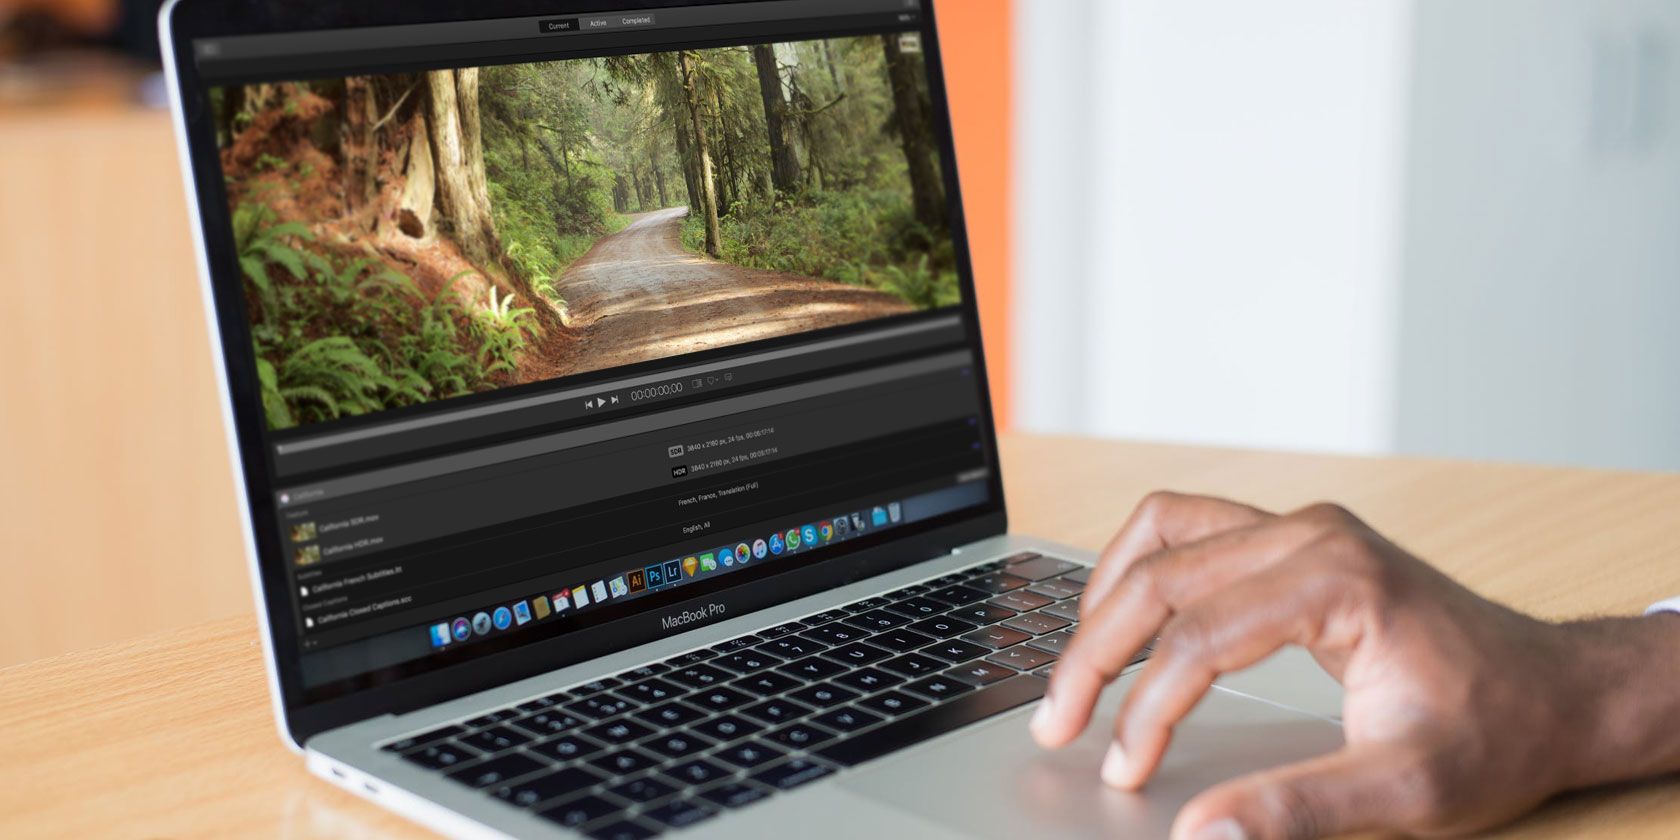 best free video converter for mac 2016